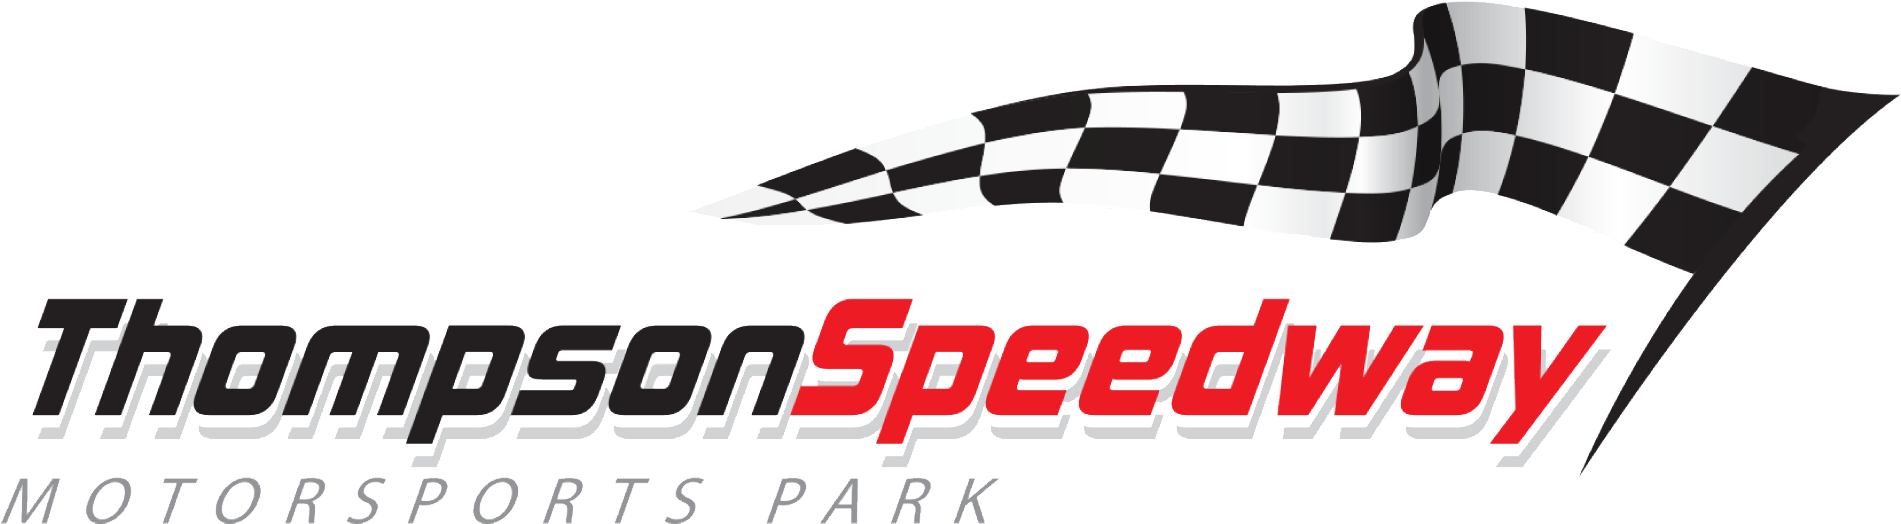 Thompson Speedway Motorsports Park Announces New Season - Thompson Speedway Motorsports Park (1920x1080), Png Download